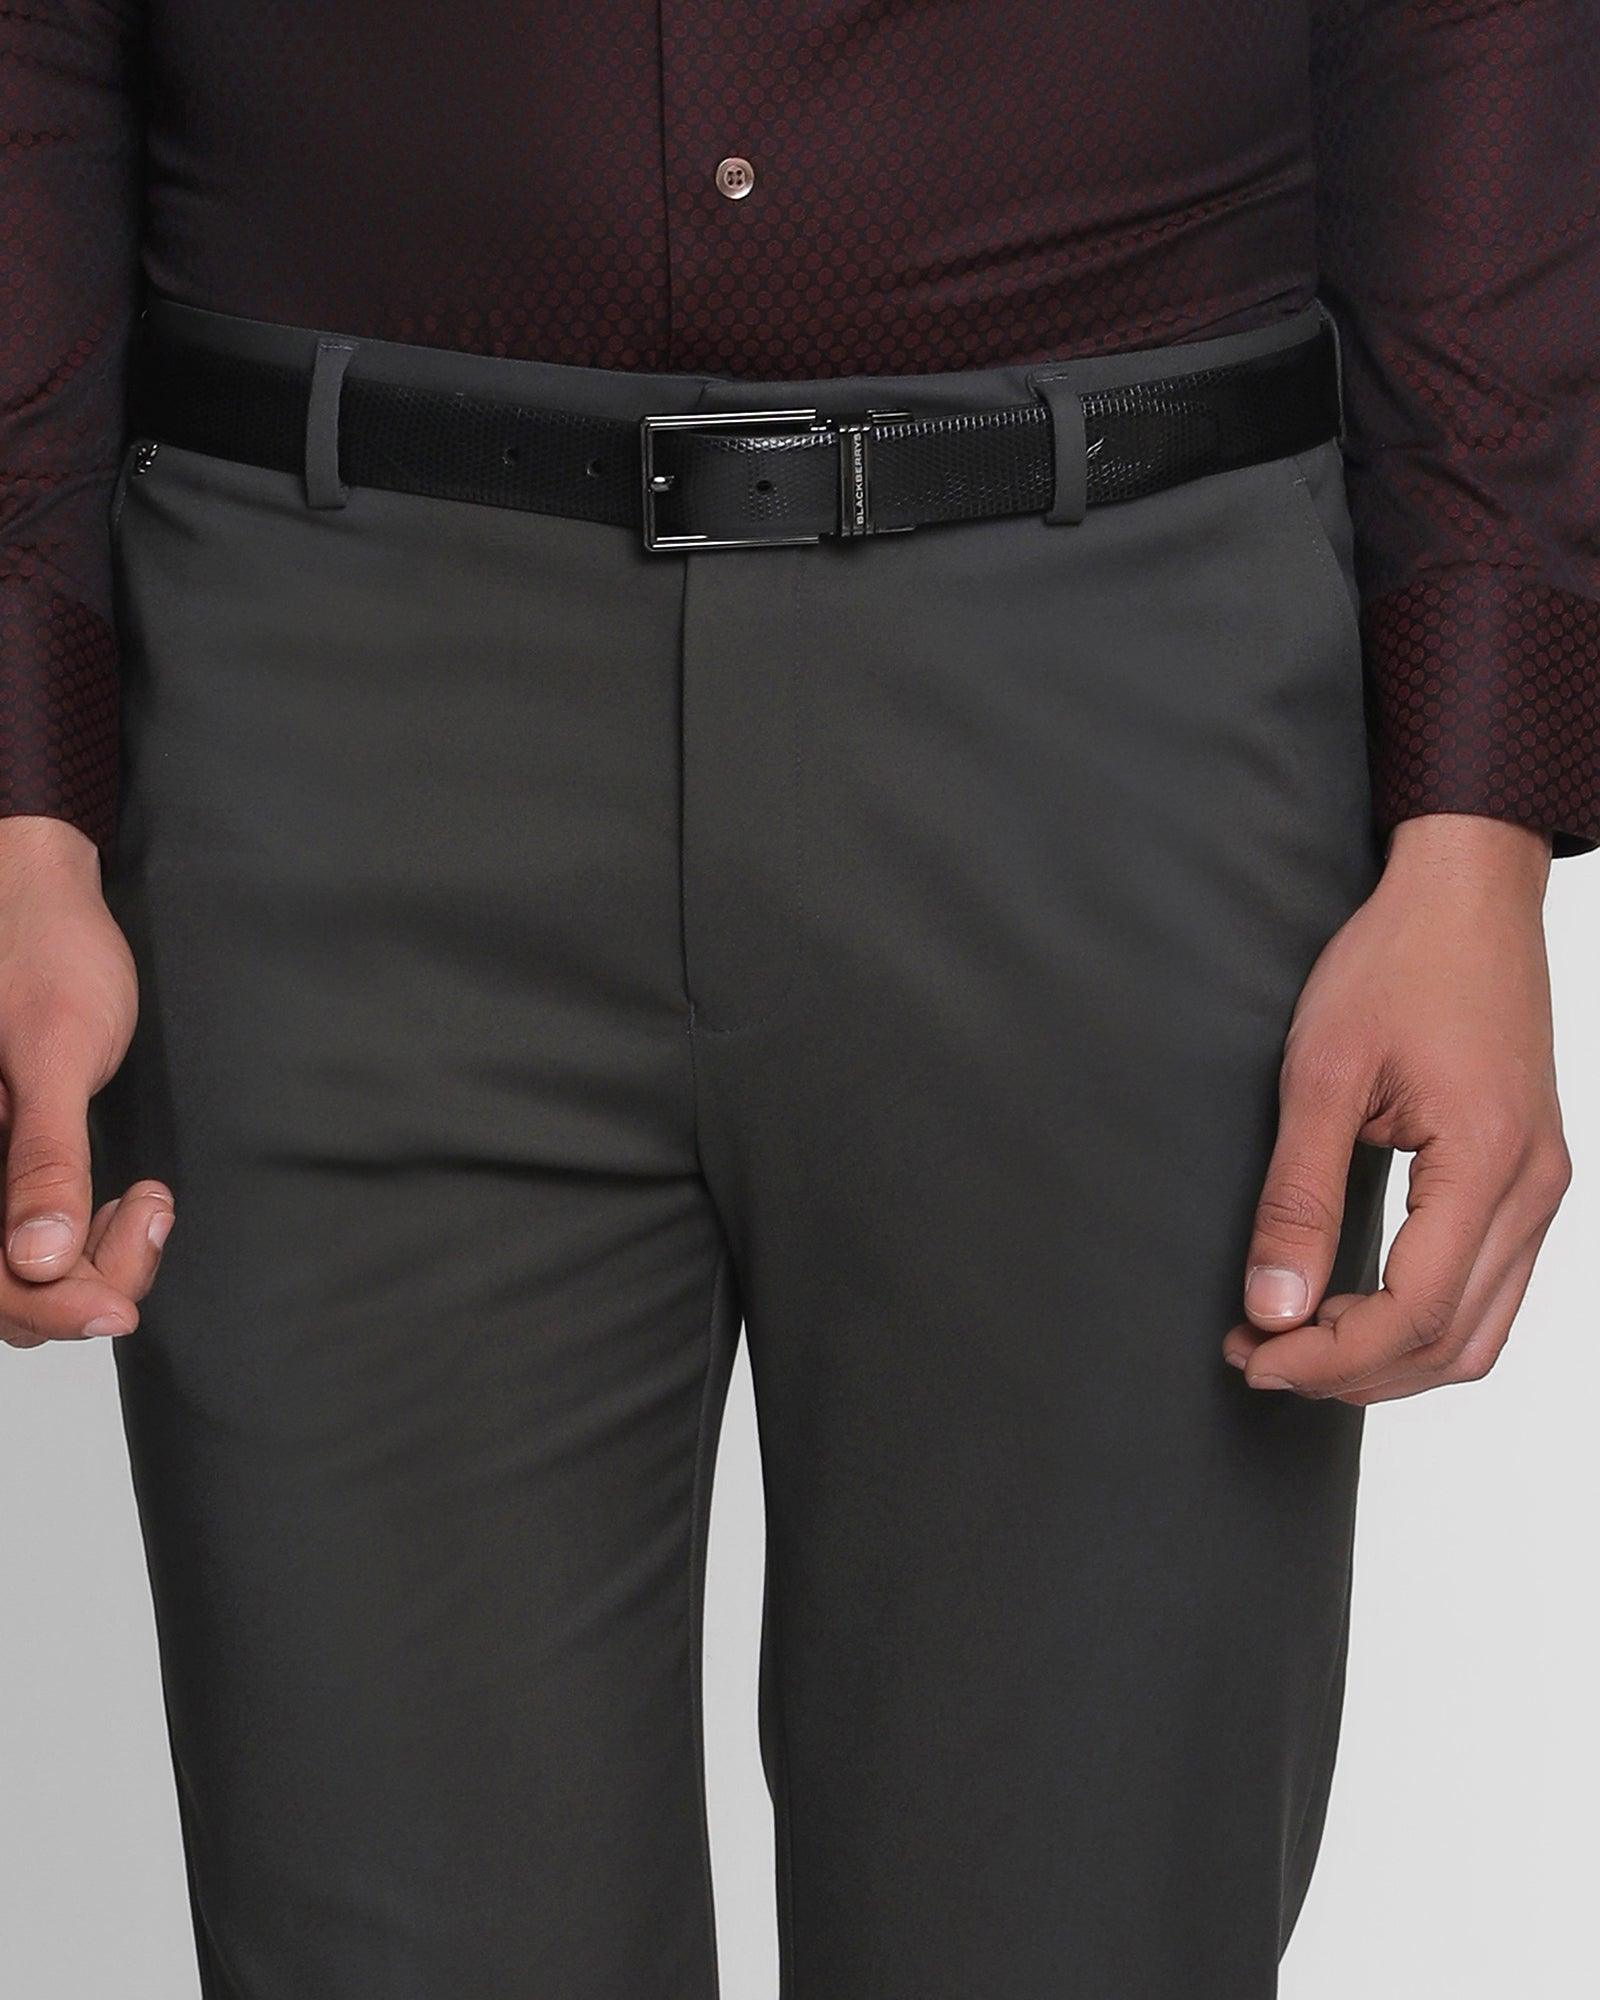 VTG 80s Levis Action Slacks Pants Men 34 X 30 Relaxed Tapered Brown Dress  Formal | eBay